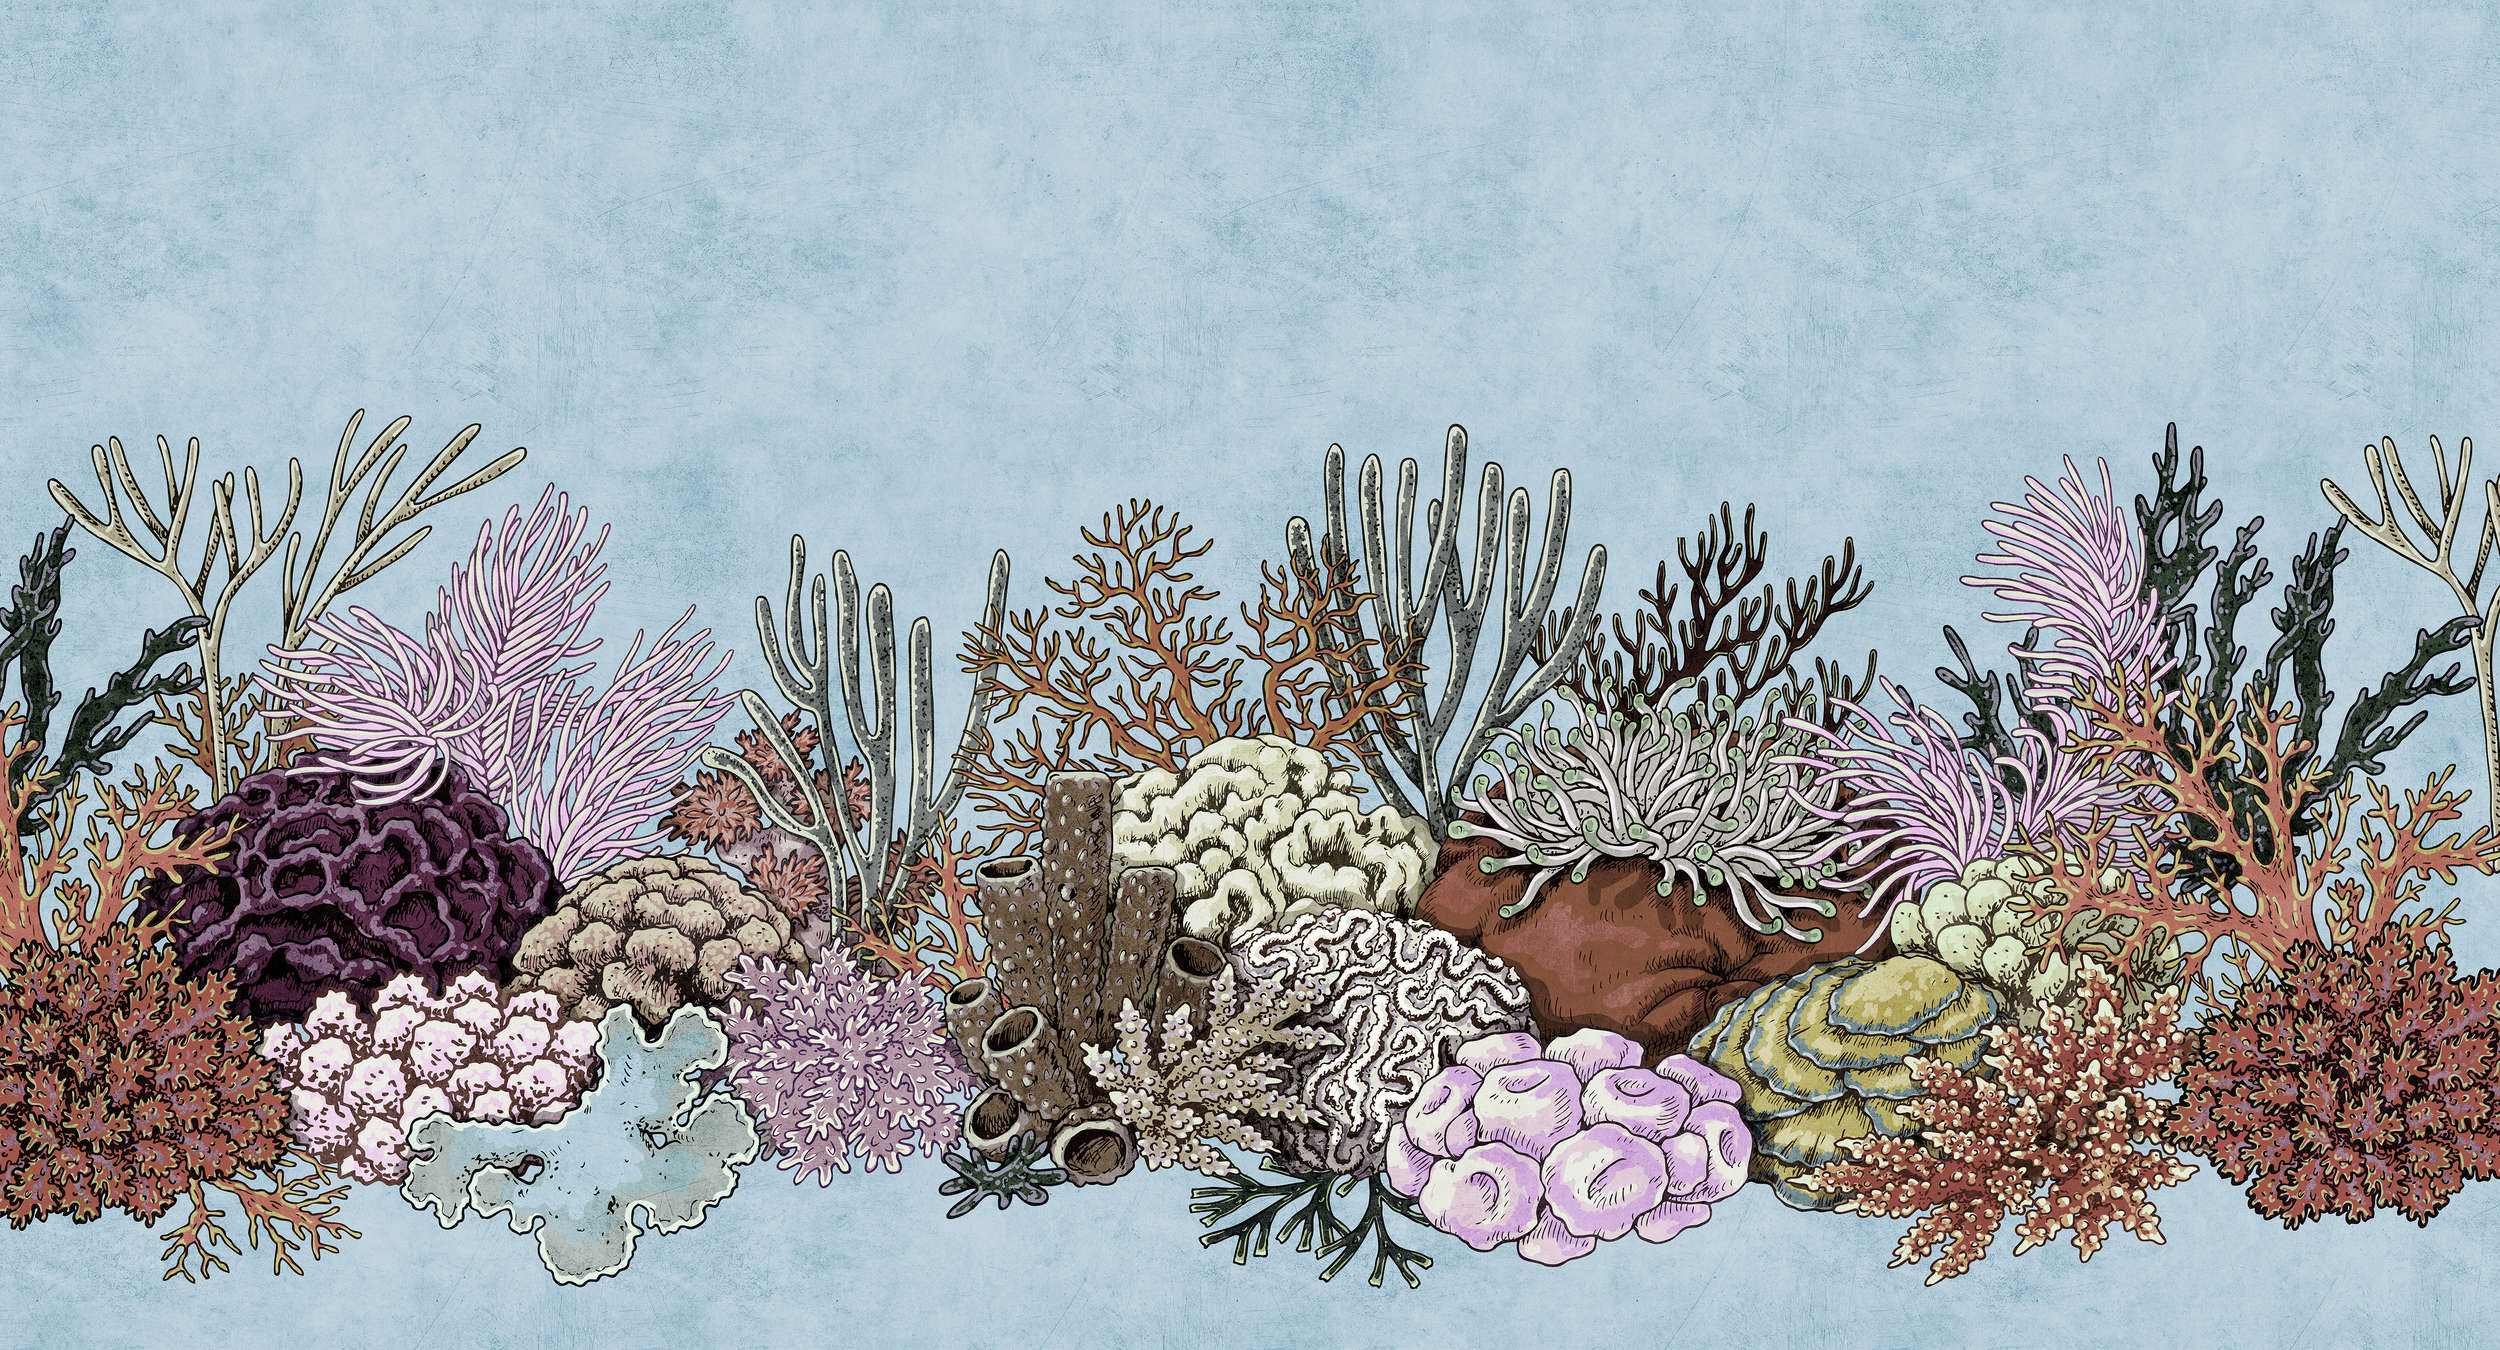             Octopus's Garden 1 - Underwater Wallpaper with Corals in Blotting Paper Texture - Blue, Pink | Texture Non-woven
        